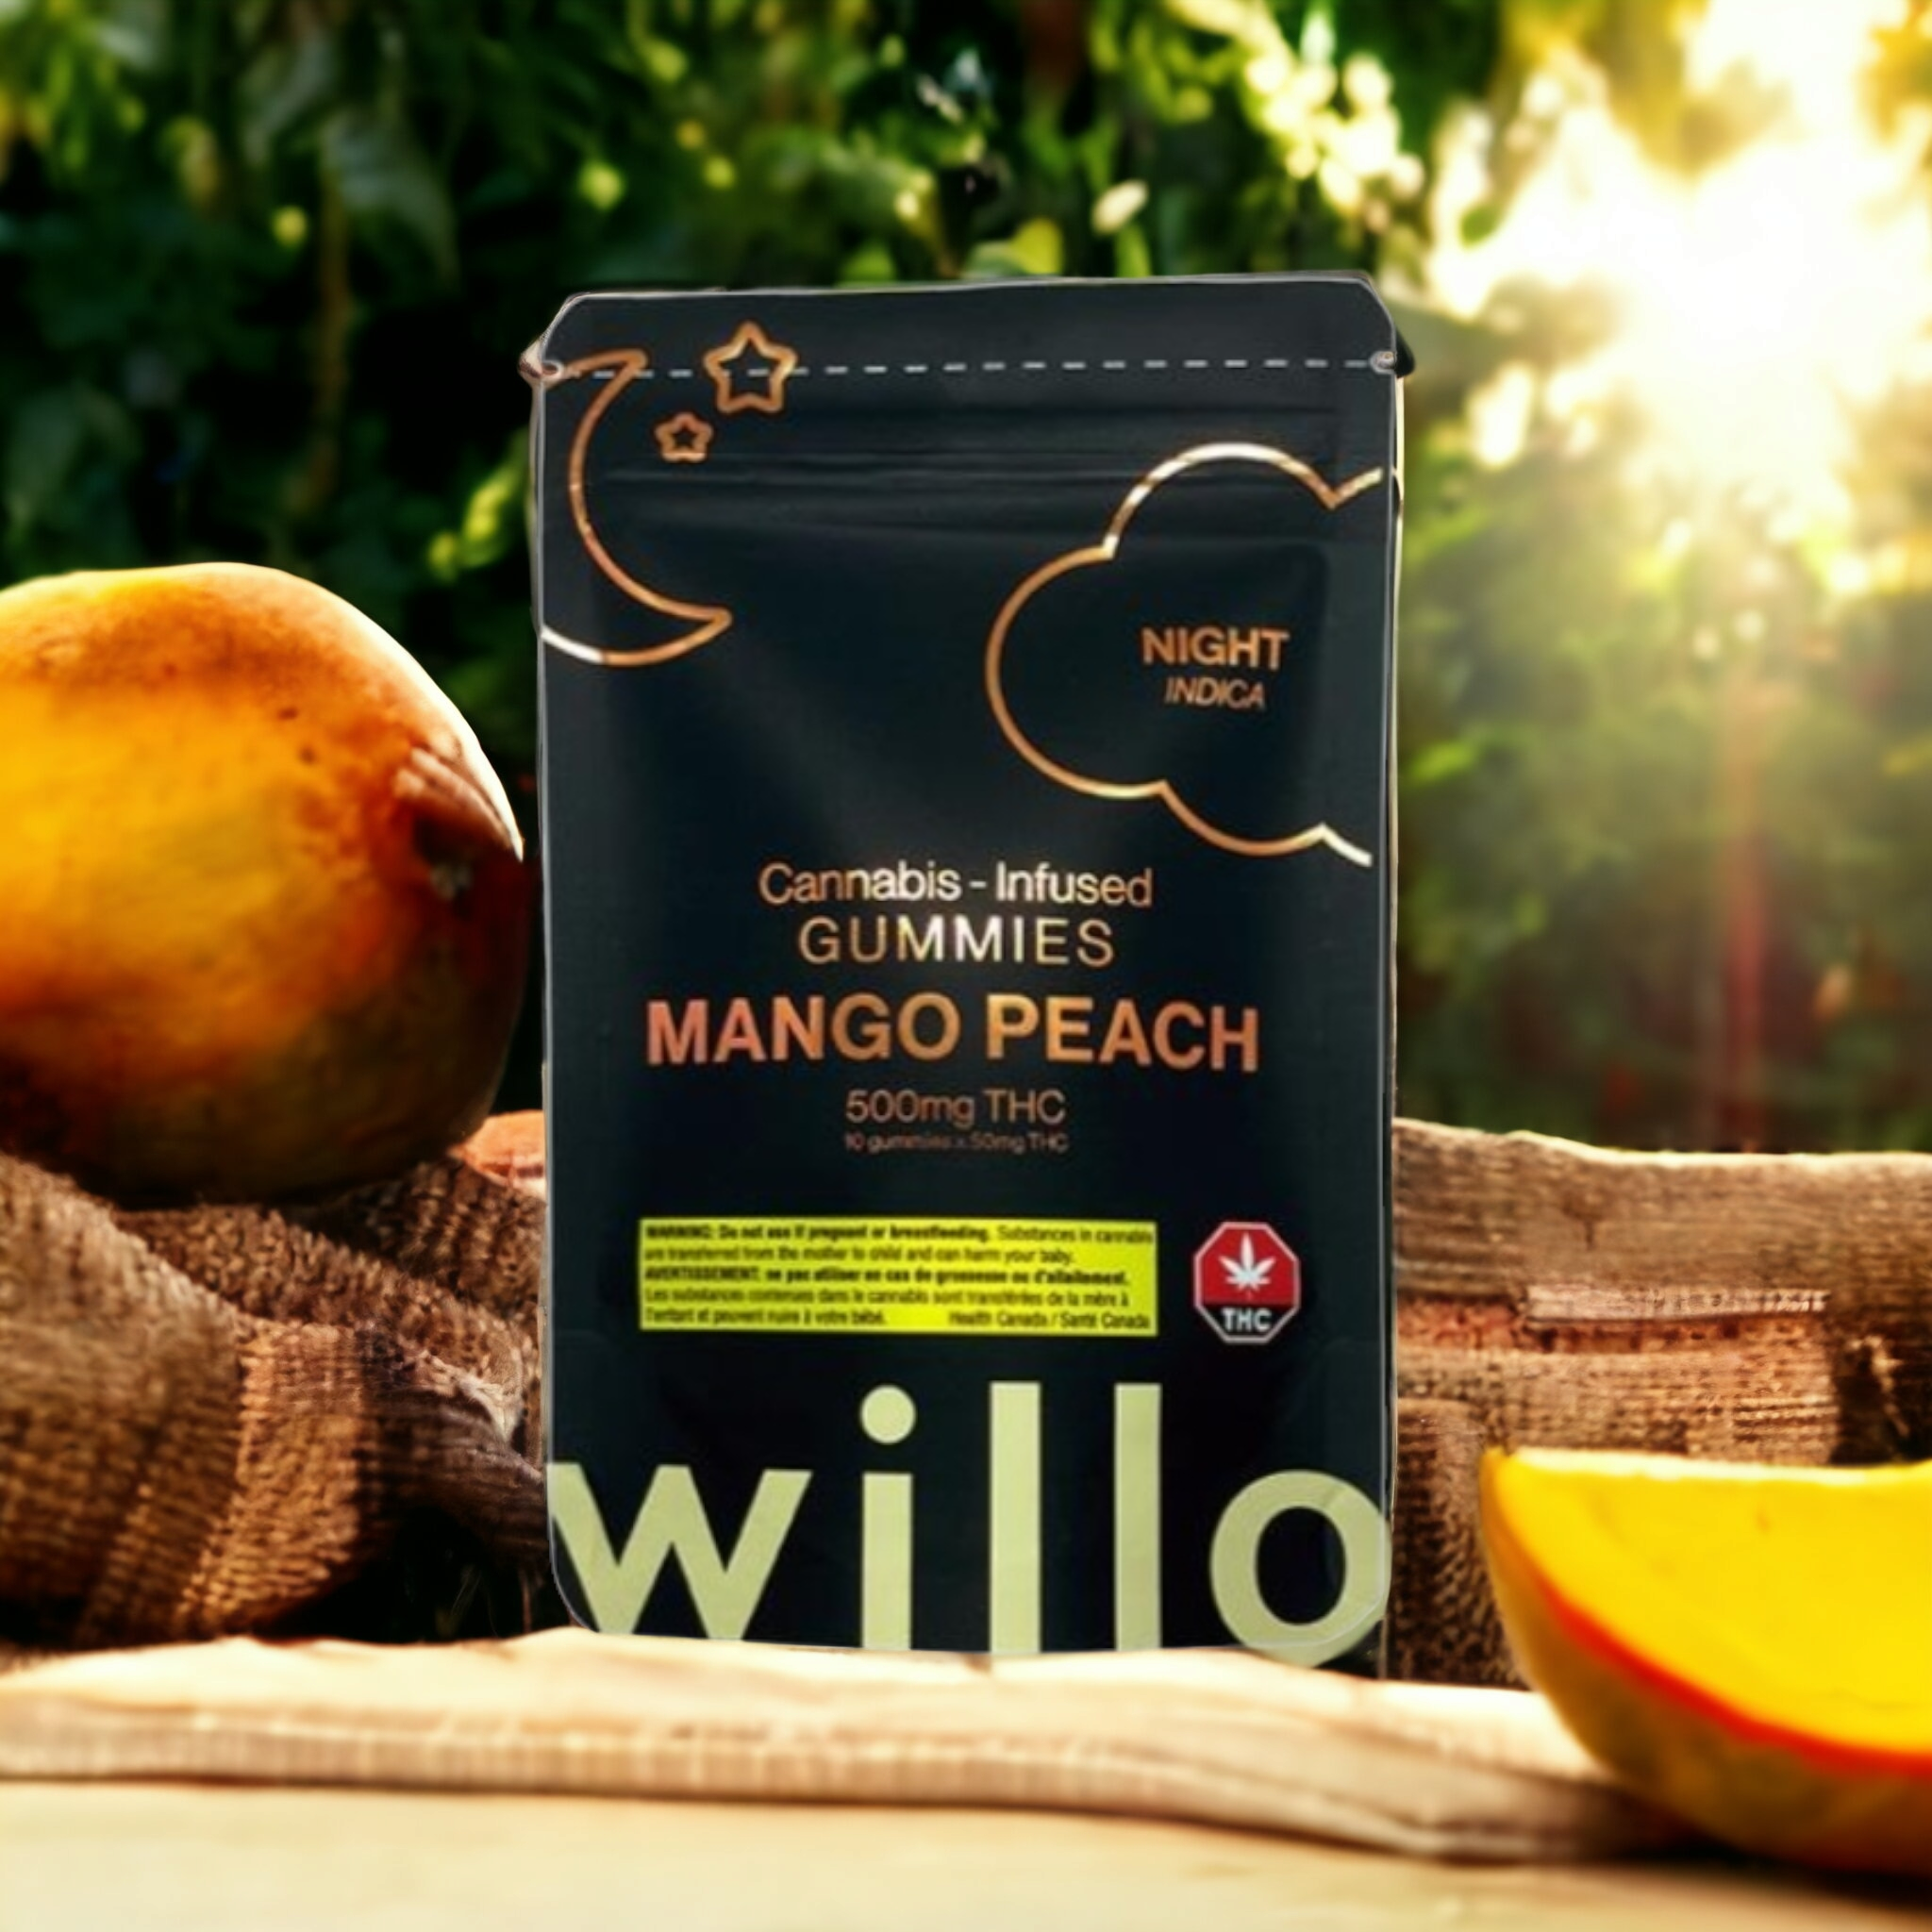 Willo – 500mg THC Mango Peach (Night) Gummies